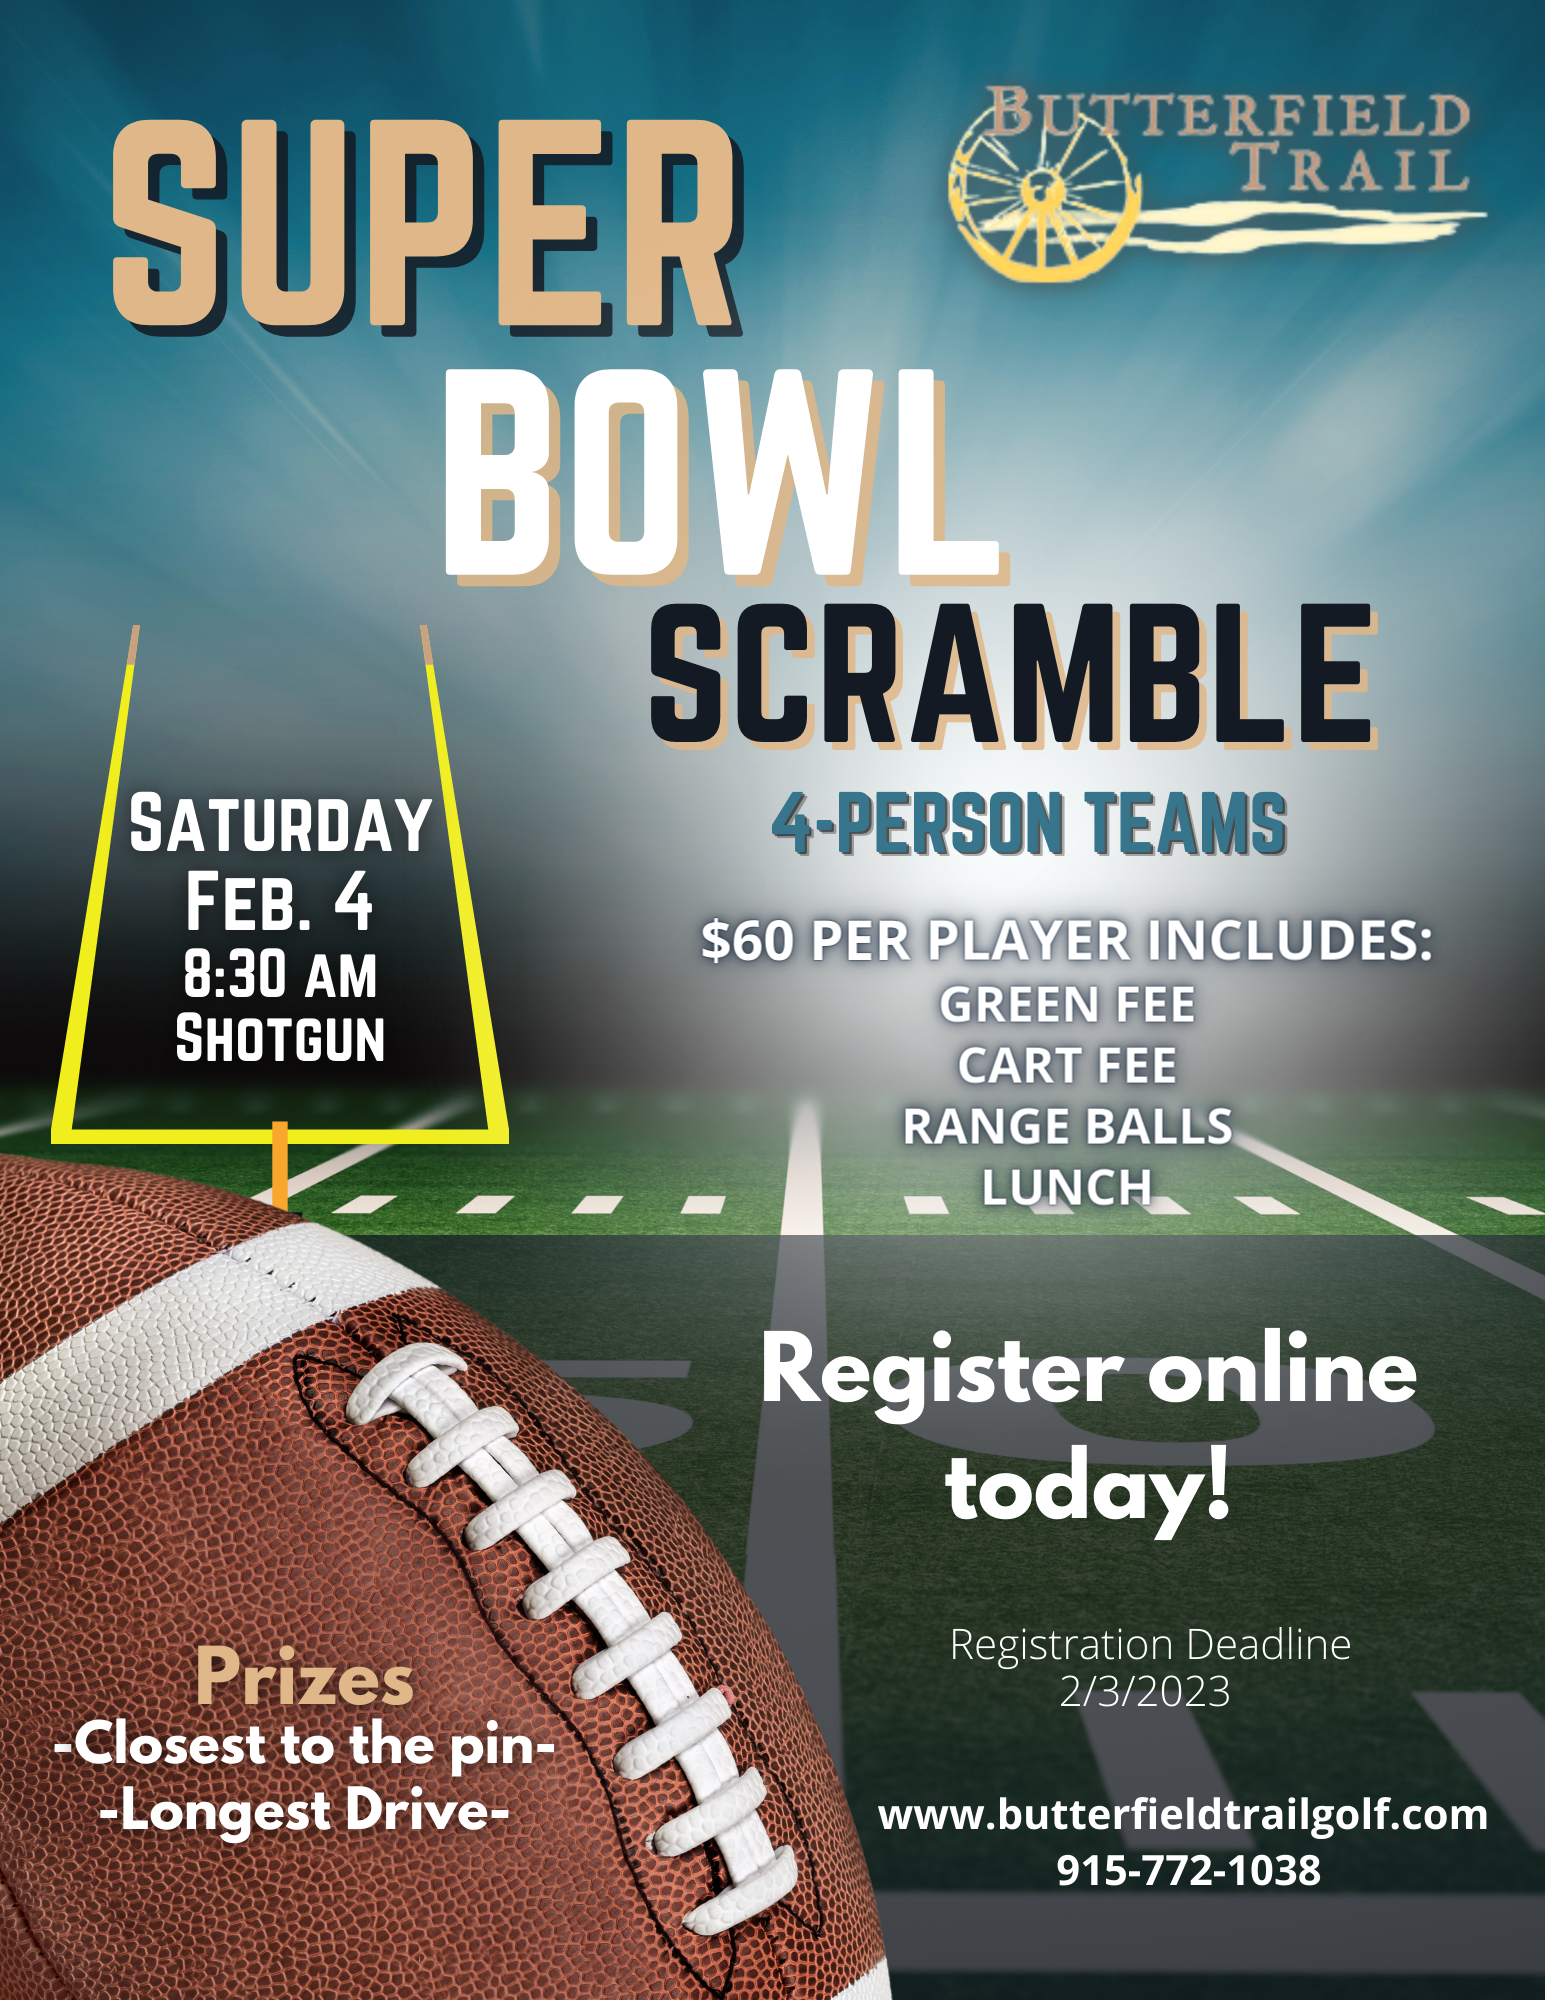 Butterfield Trail Super Bowl Scramble 2023 flyer 4